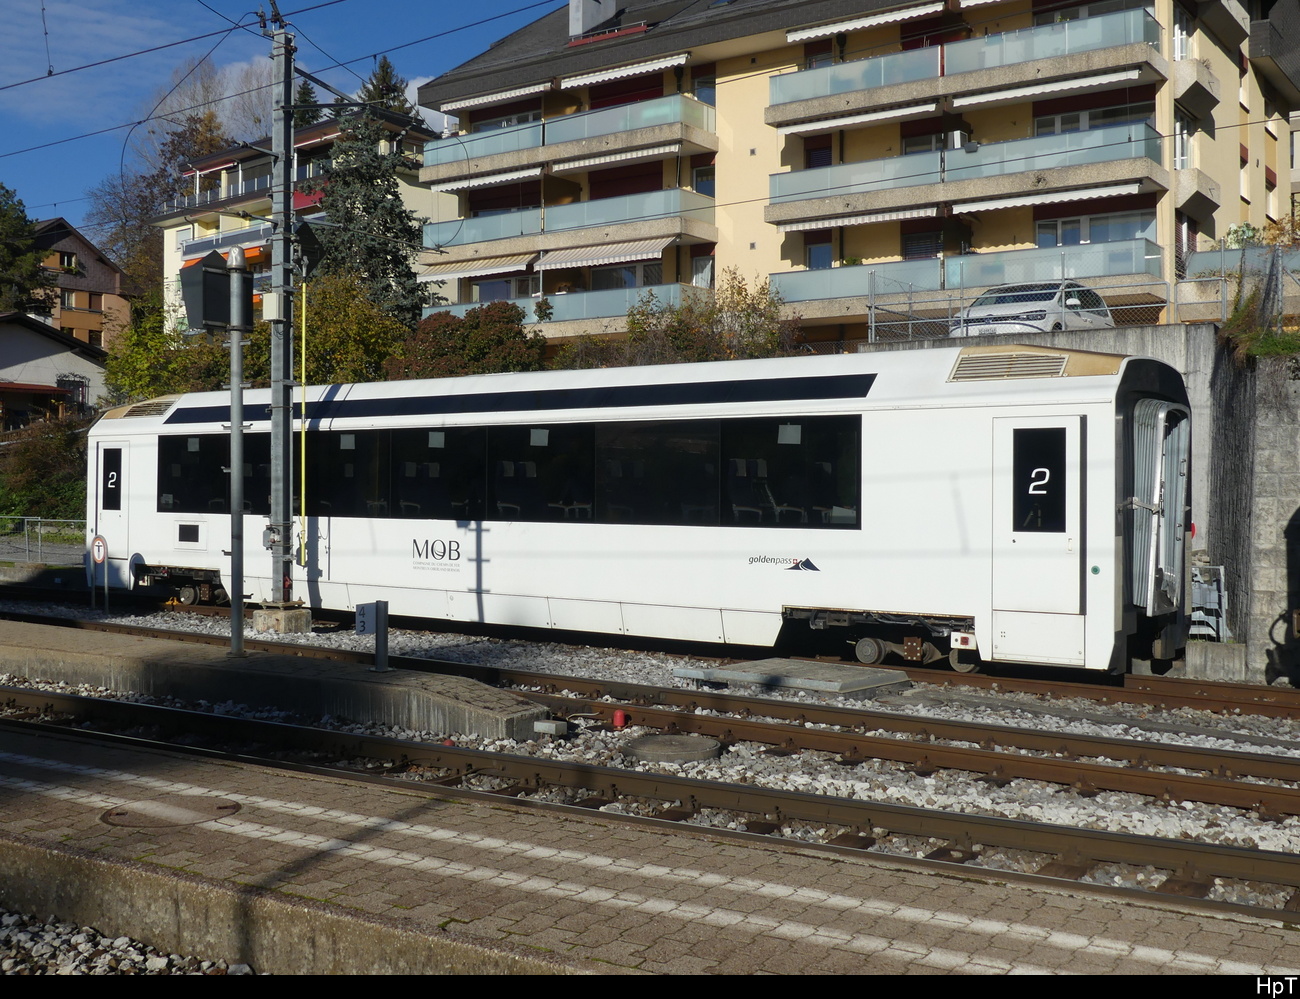 MOB / Goldenpass - Salonwagen 2 Kl. Bs 221 abgestellt in Chernex am 20.11.2022